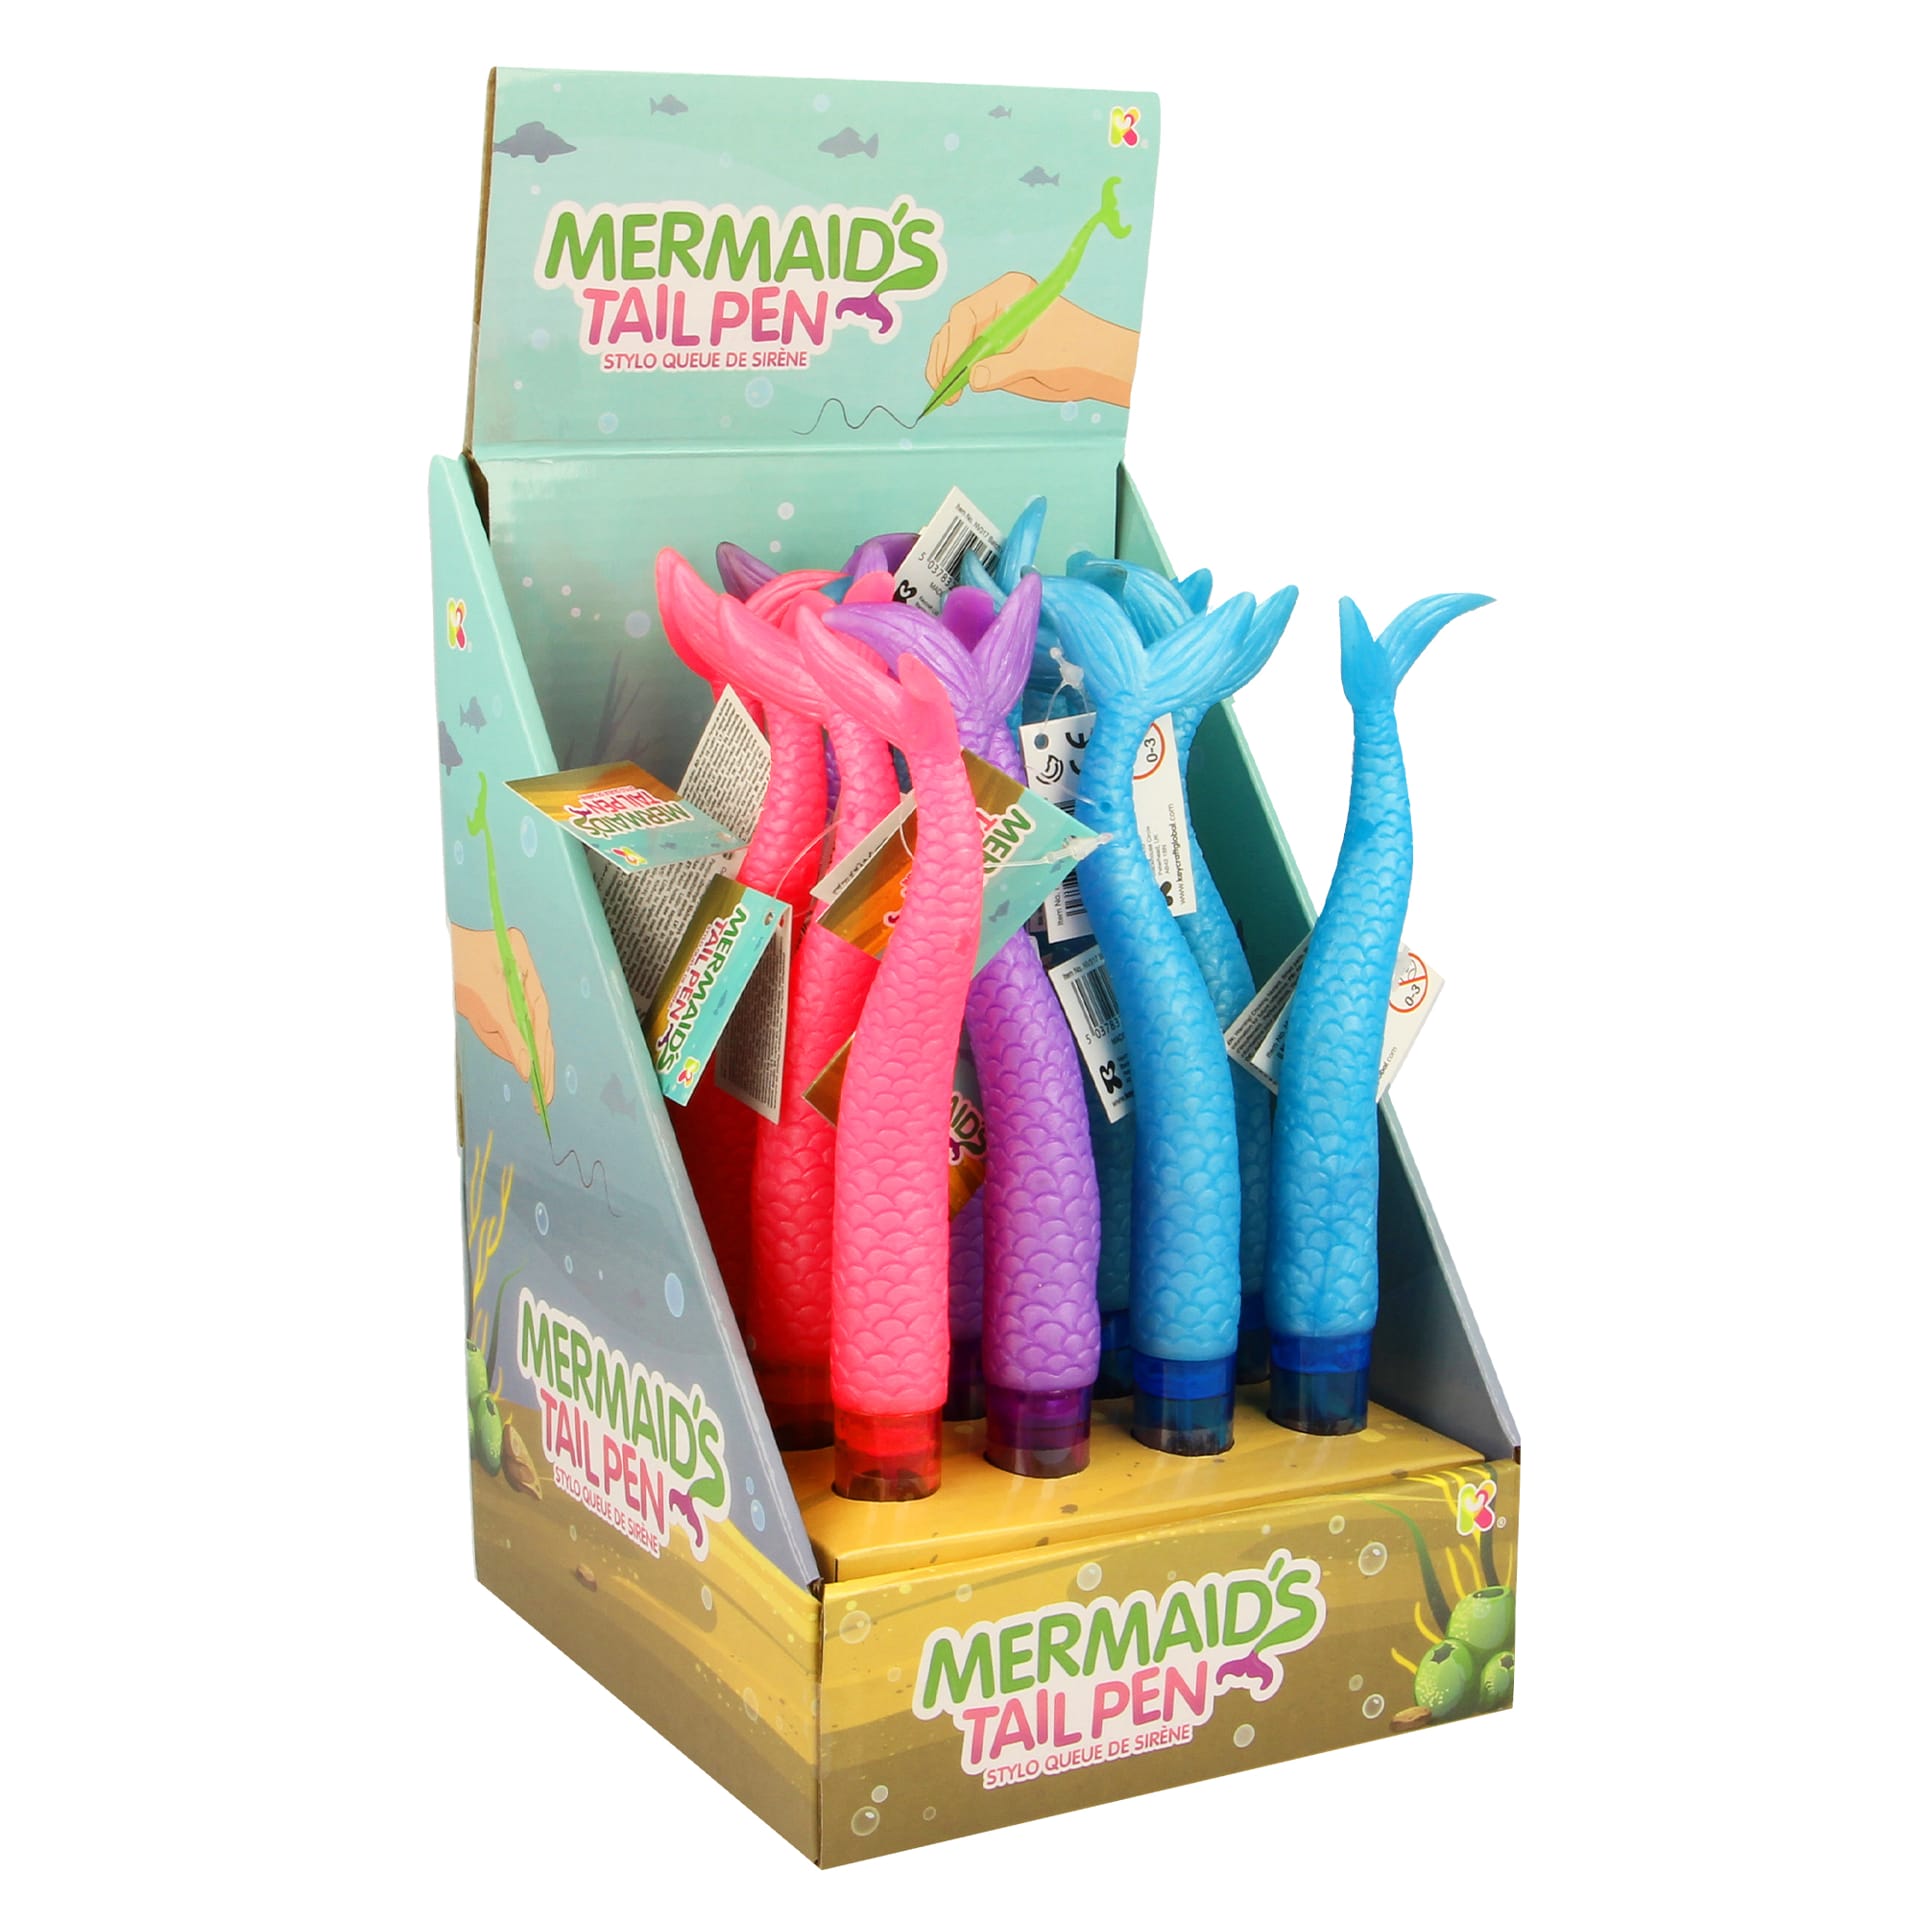 Mermaids Tail Pens